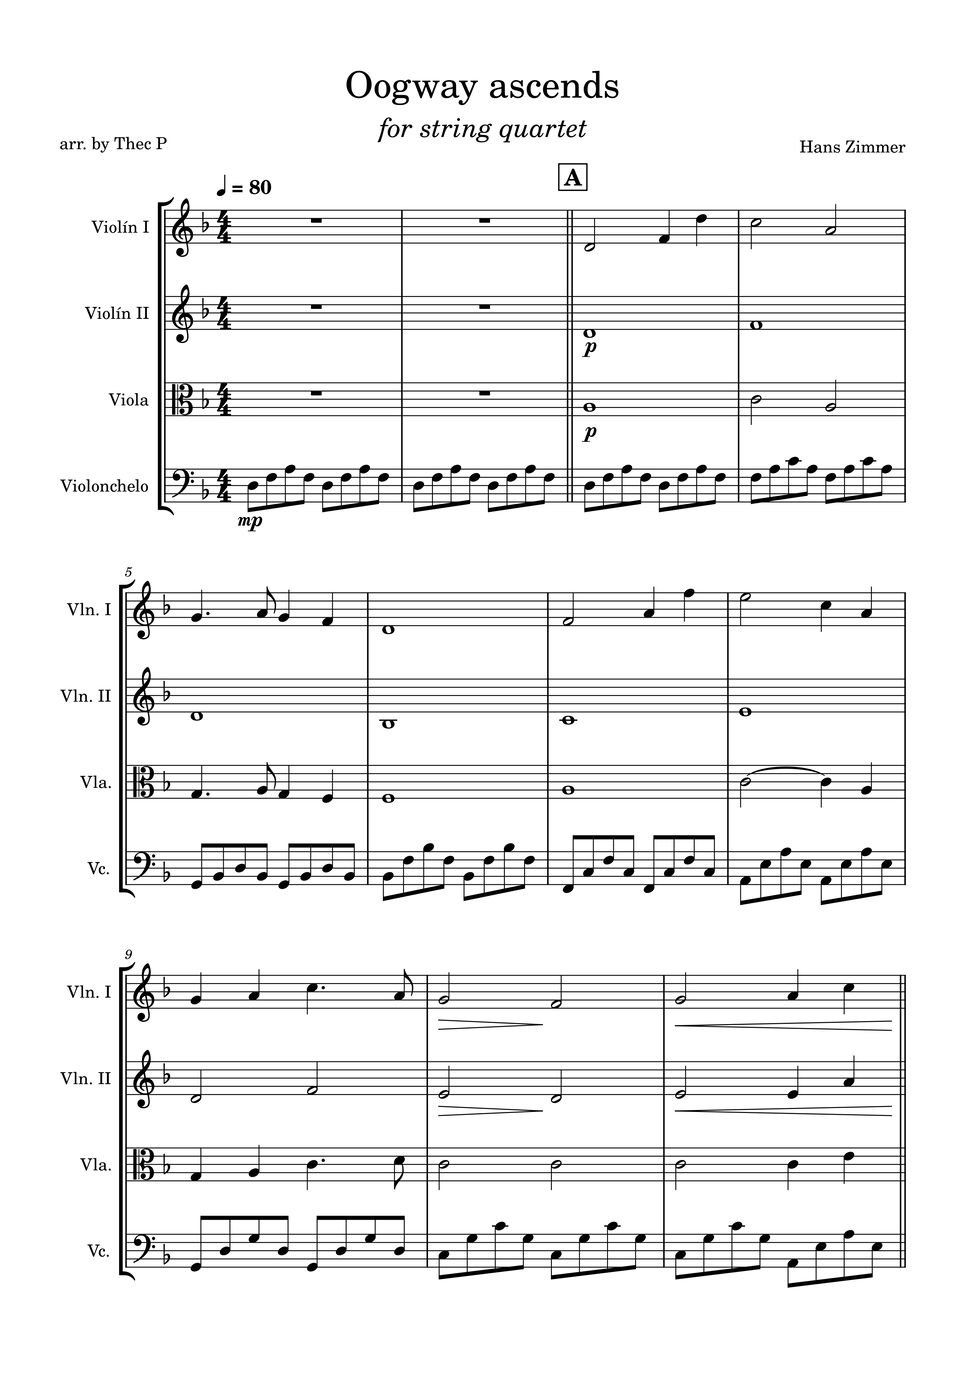 Hans Zimmer - Oogways Ascends (String quartet) by Thec P